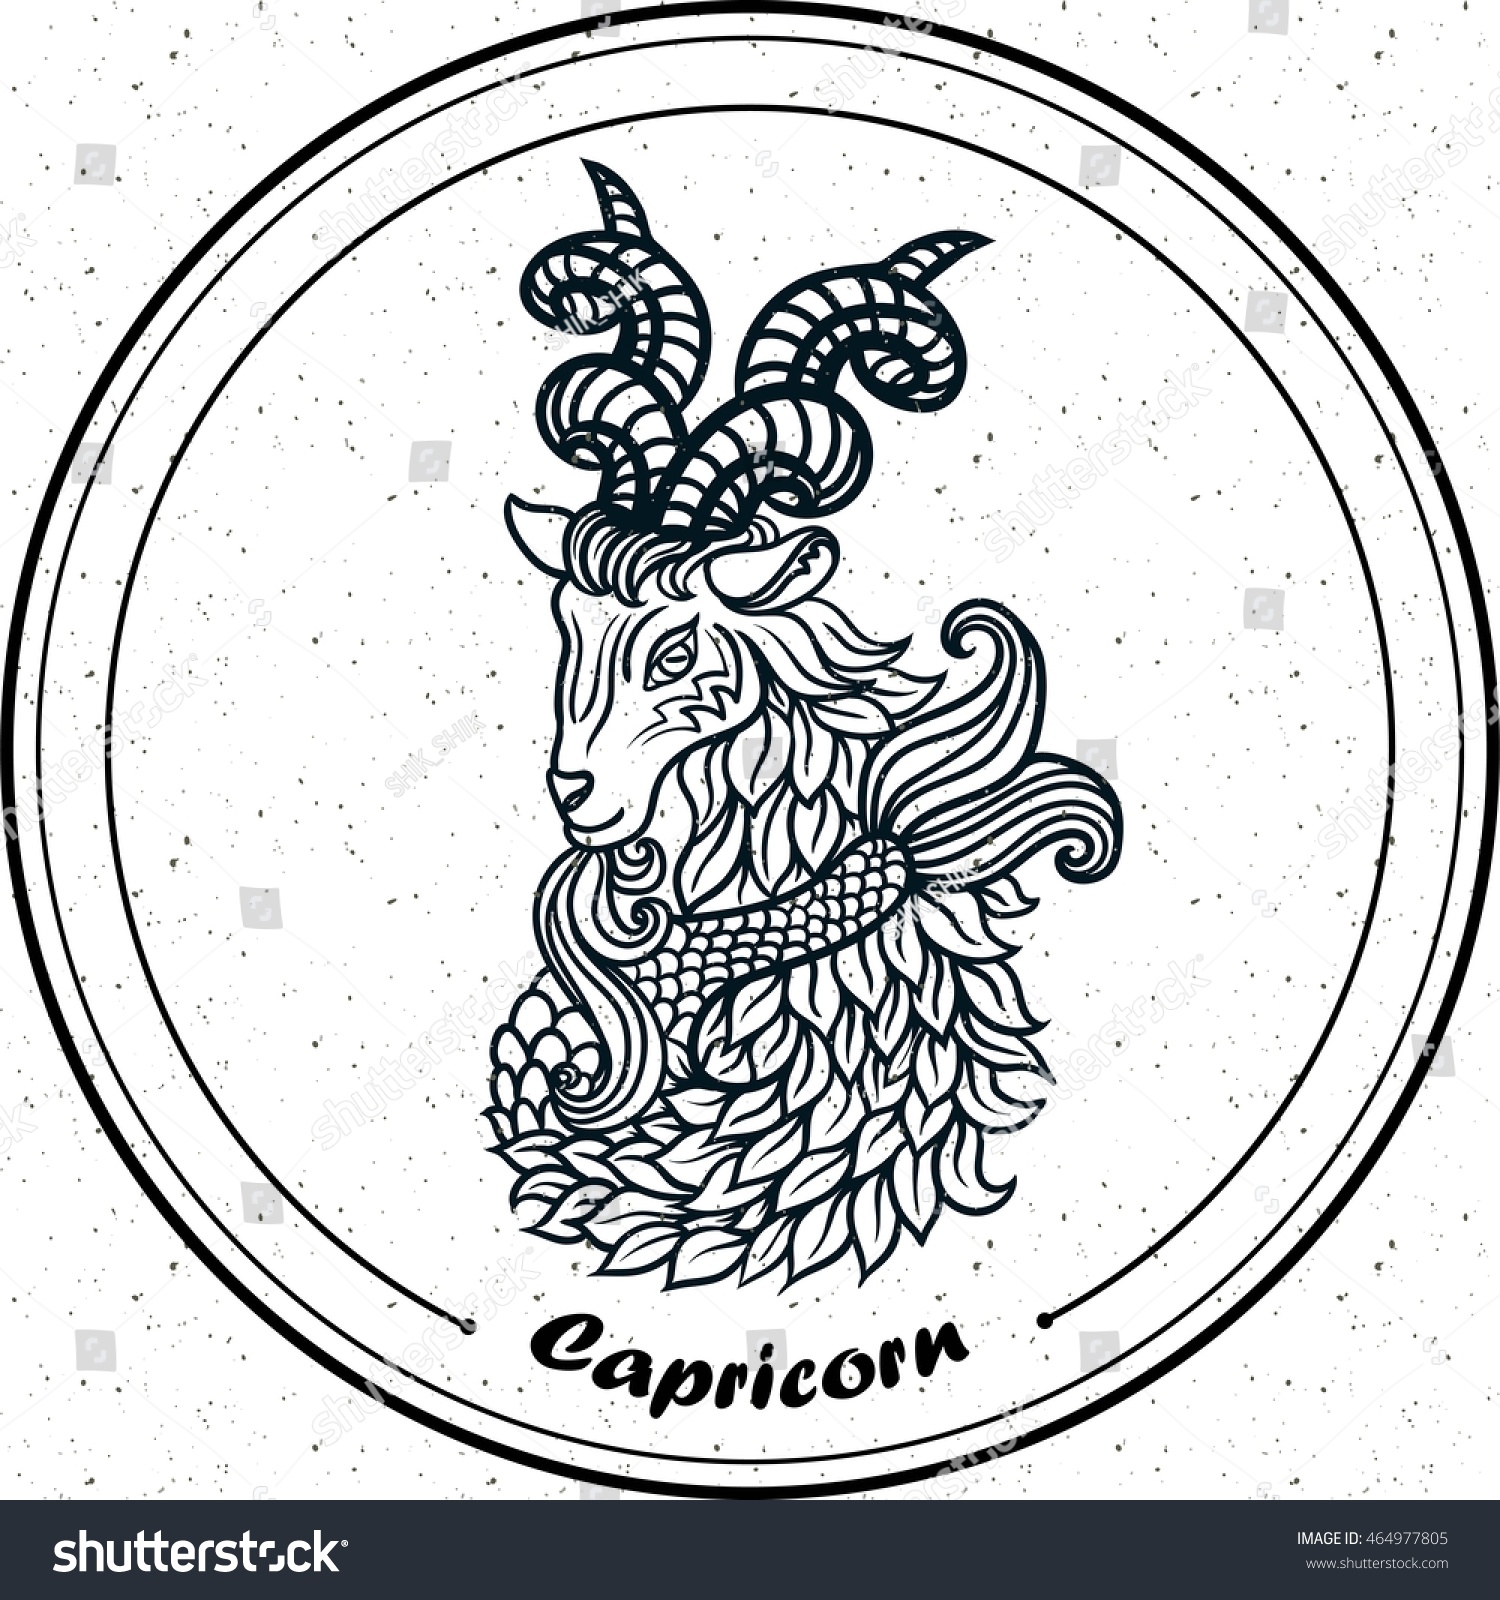 Detailed Capricorn Aztec Filigree Line Art Stock Vector 464977805 ...